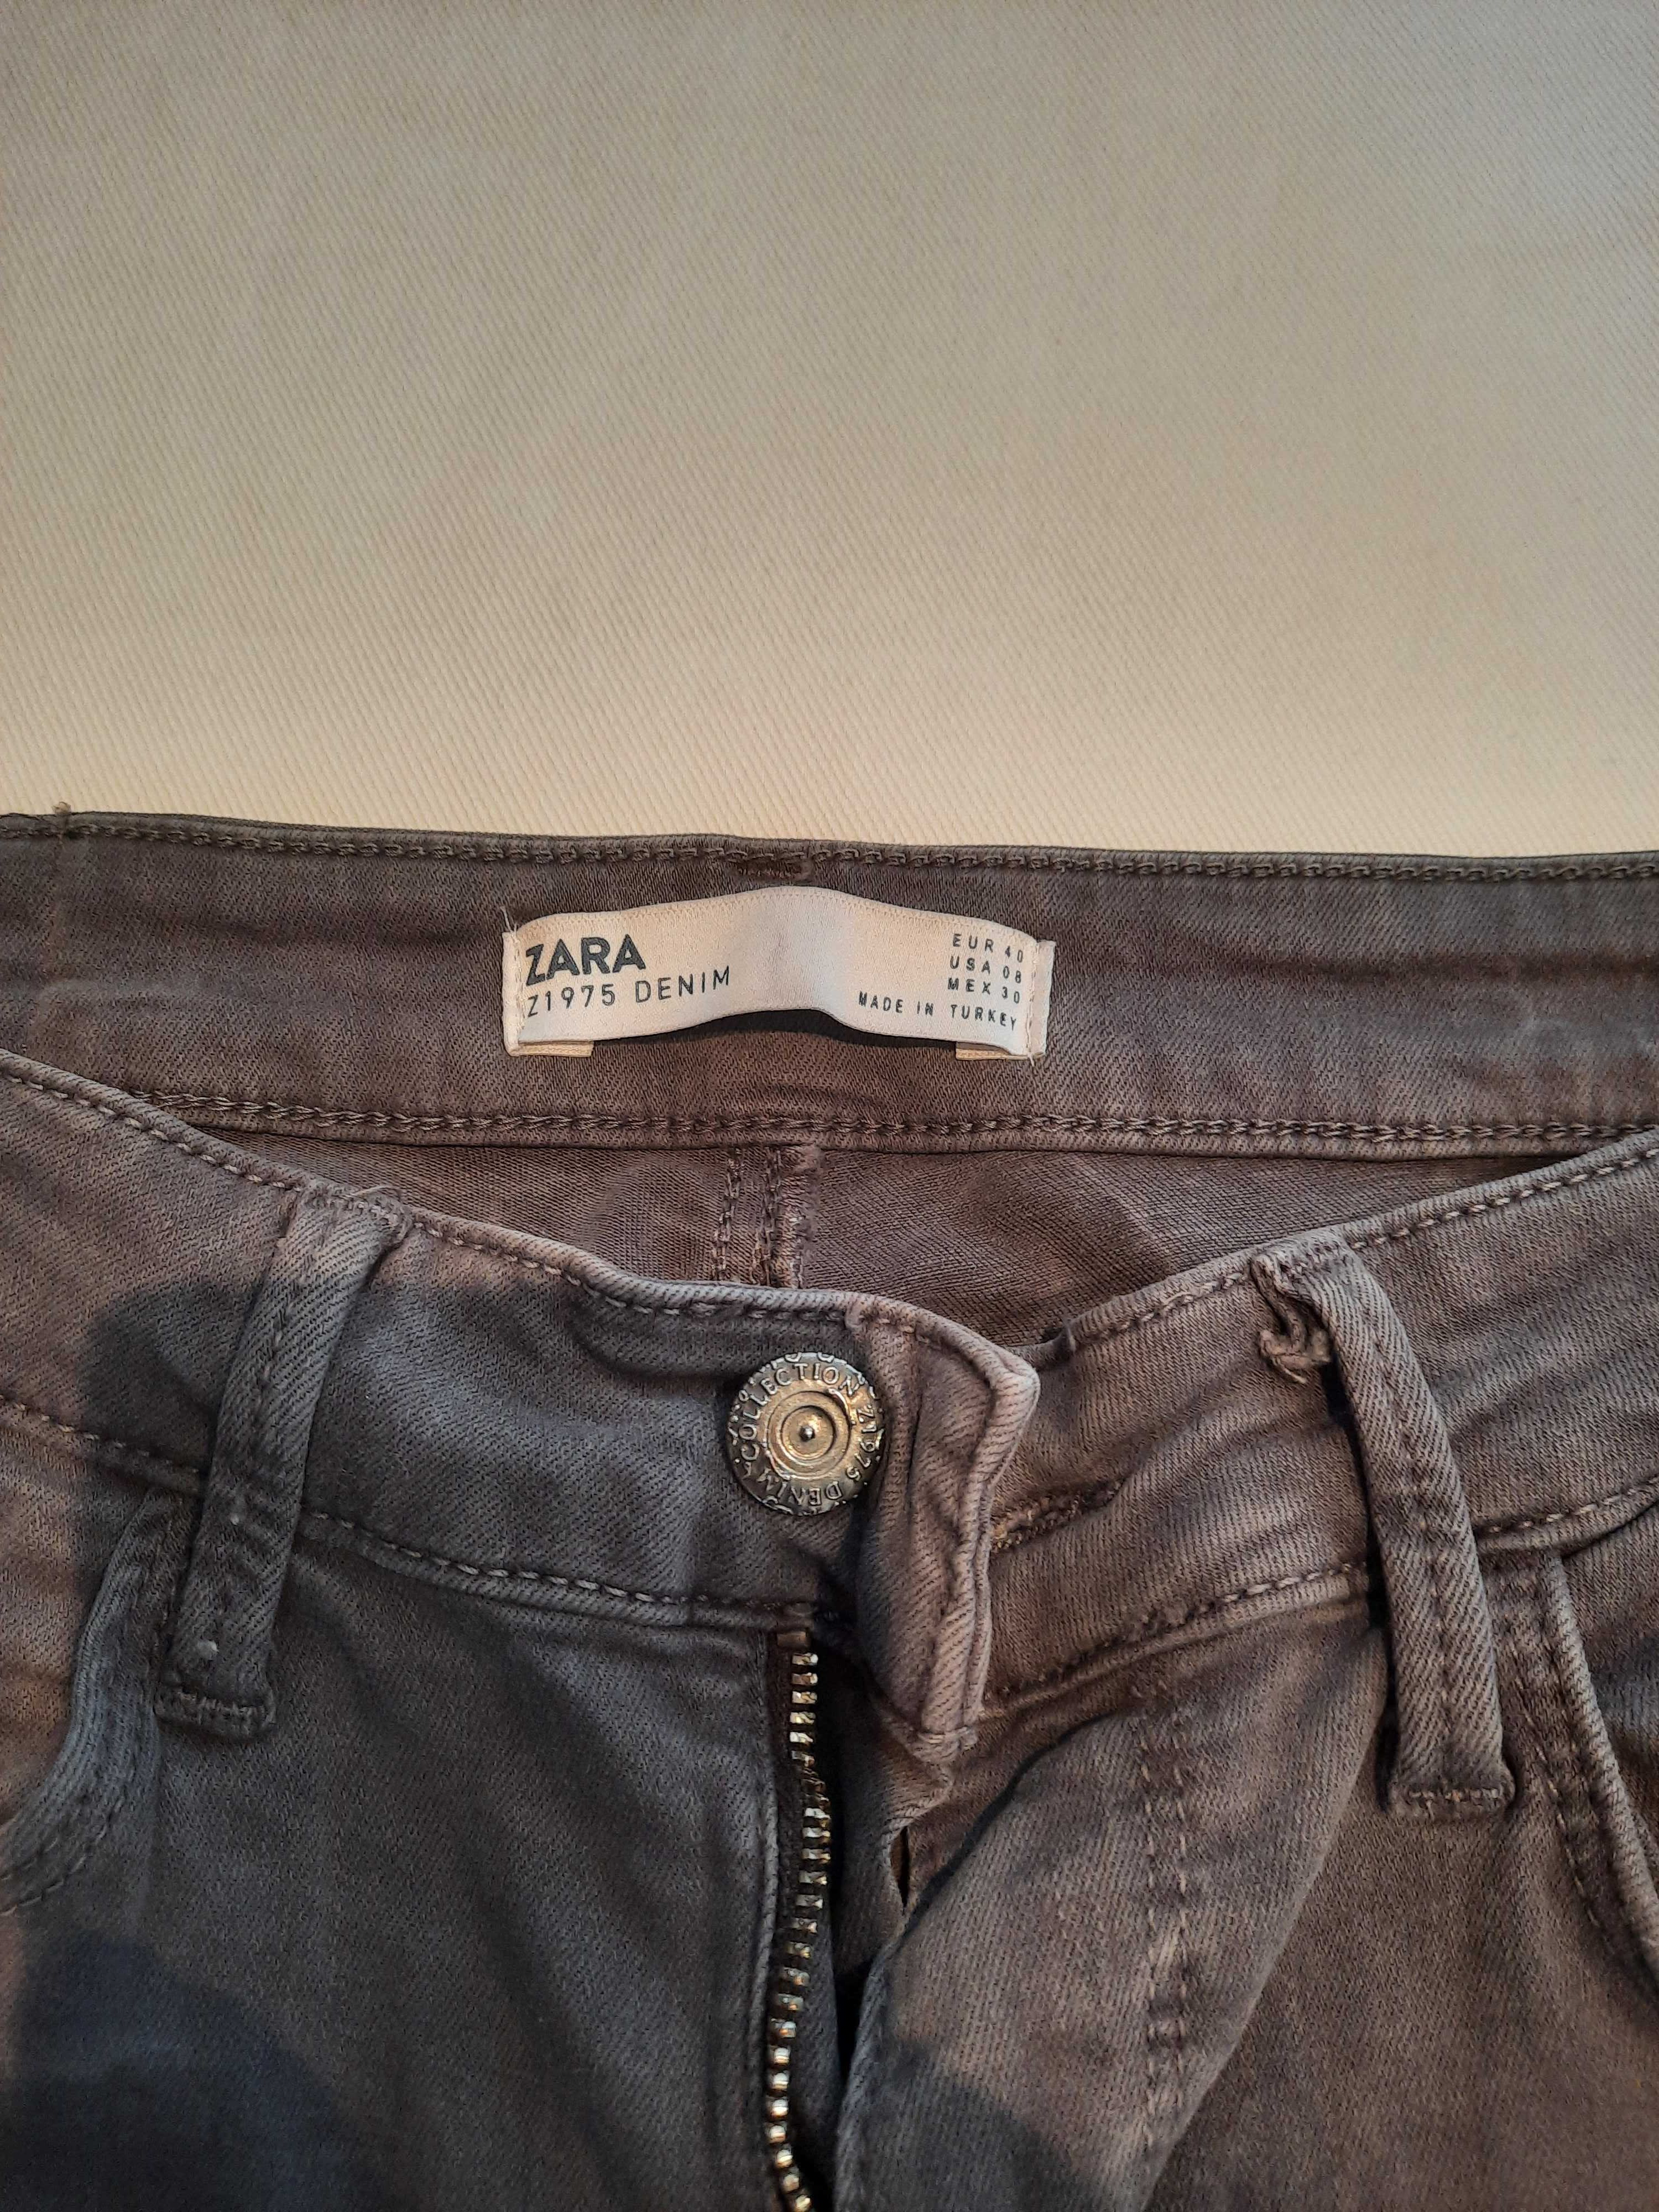 Szare jeansy, spodnie damskie Zara, rozm. 40